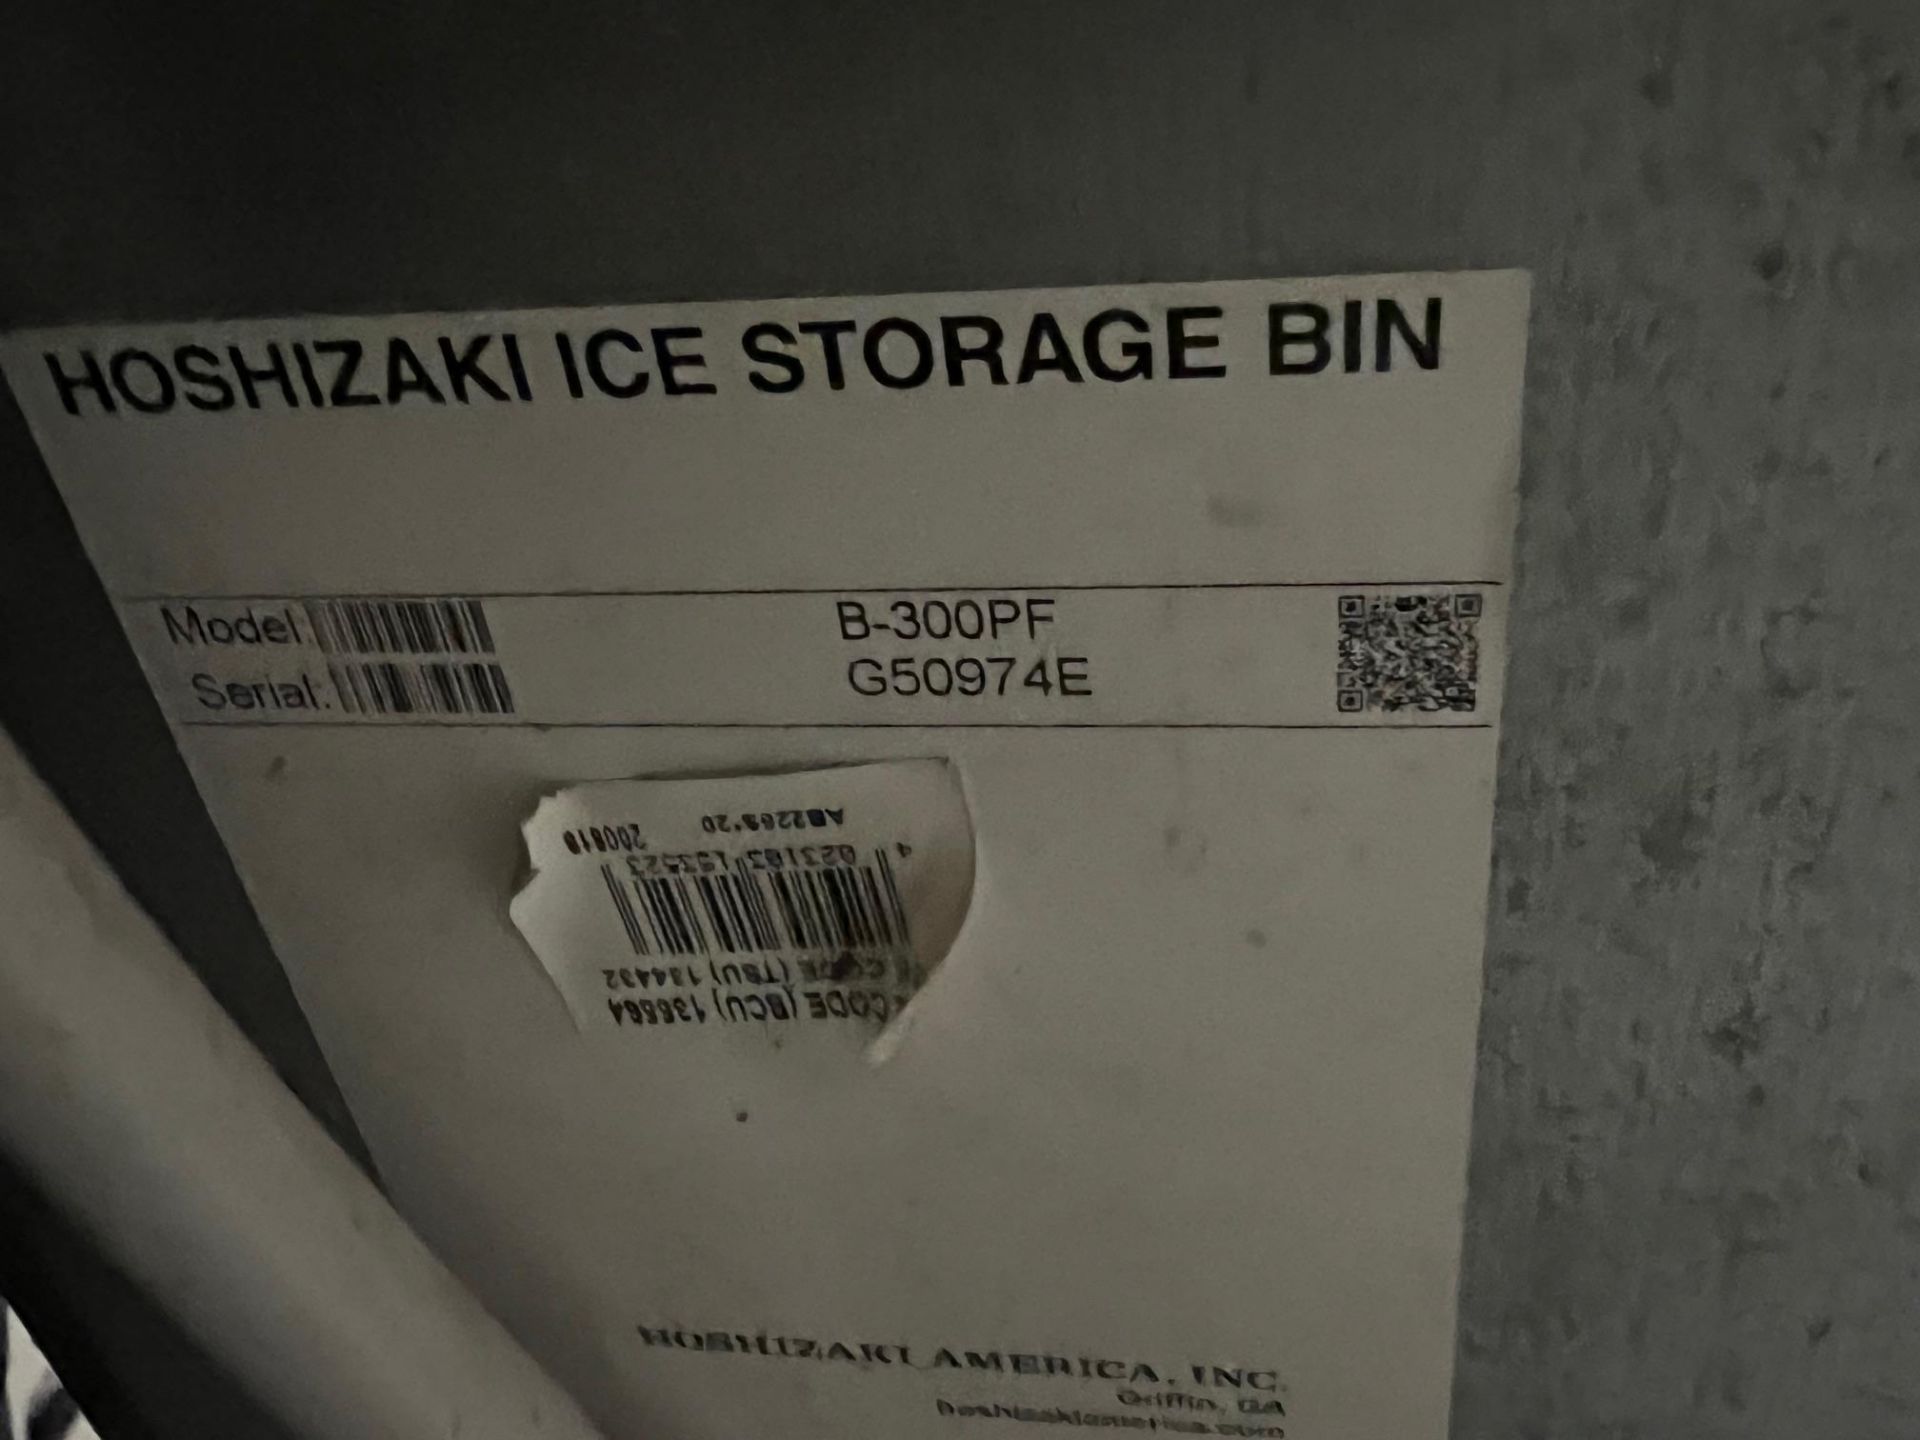 MANITOWOC QD0322A AIR COOLED ICE MAKER WITH HOSHIZAKI B-300 PF ICE BIN - Image 6 of 6